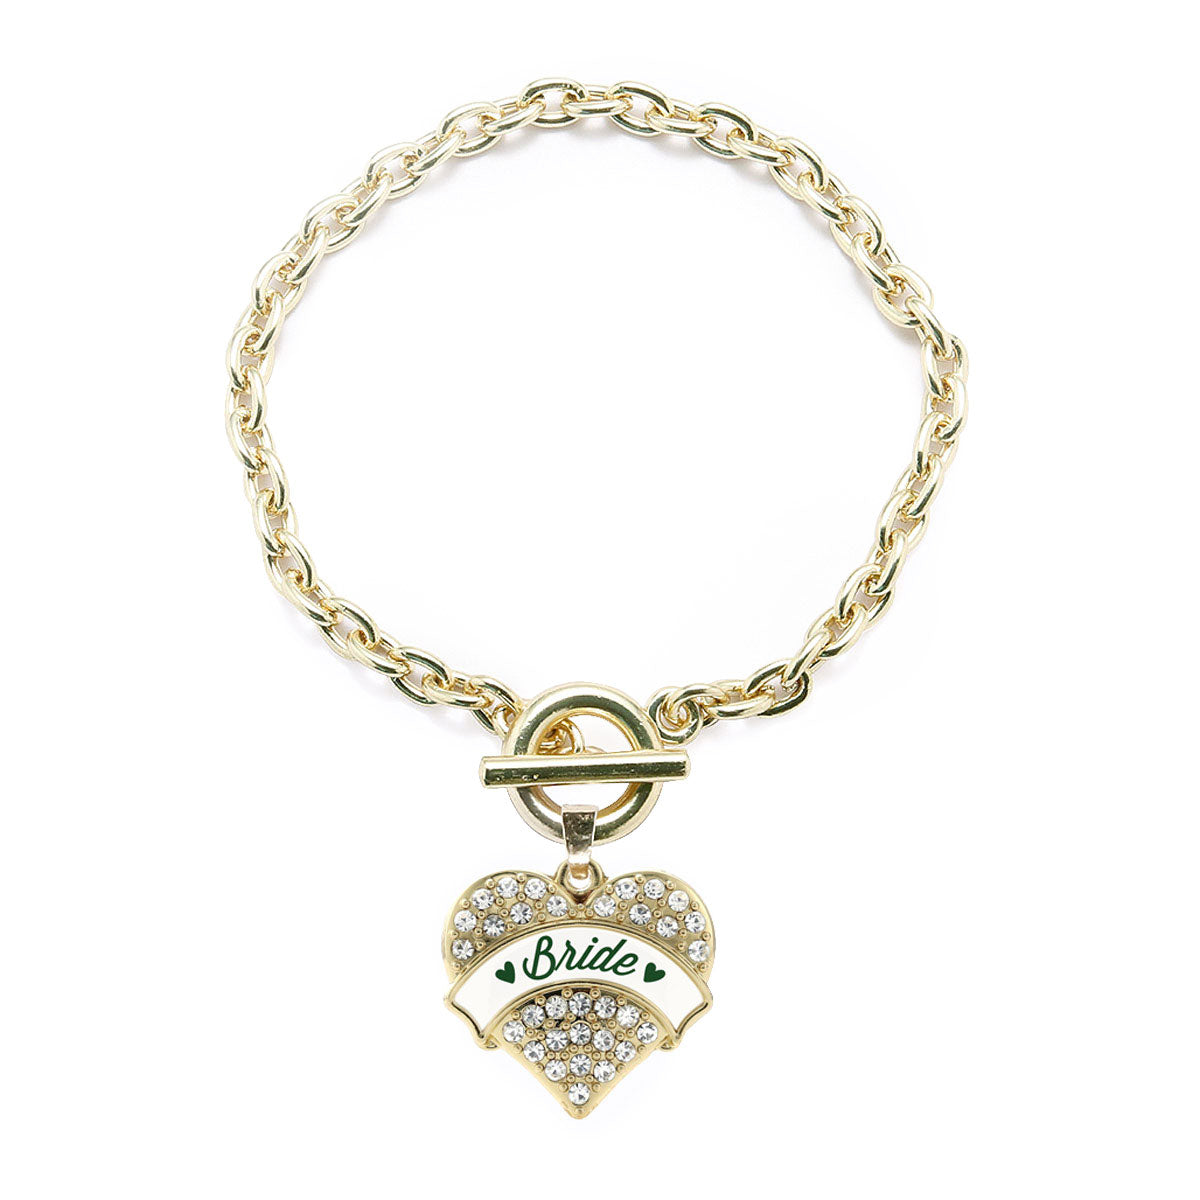 Gold Forest Green Bride Pave Heart Charm Toggle Bracelet